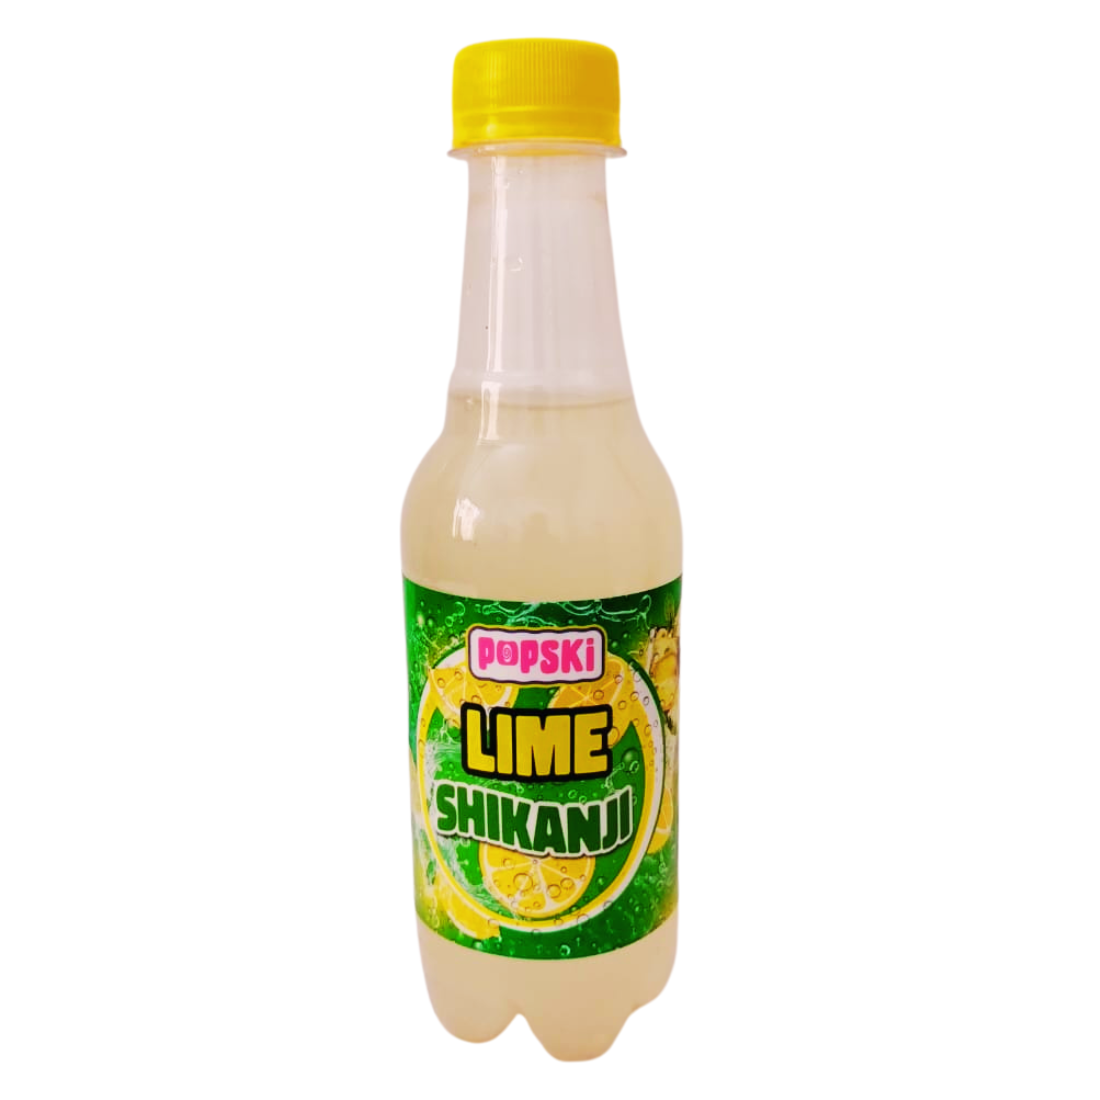 Popski Lime Shikanji Drink